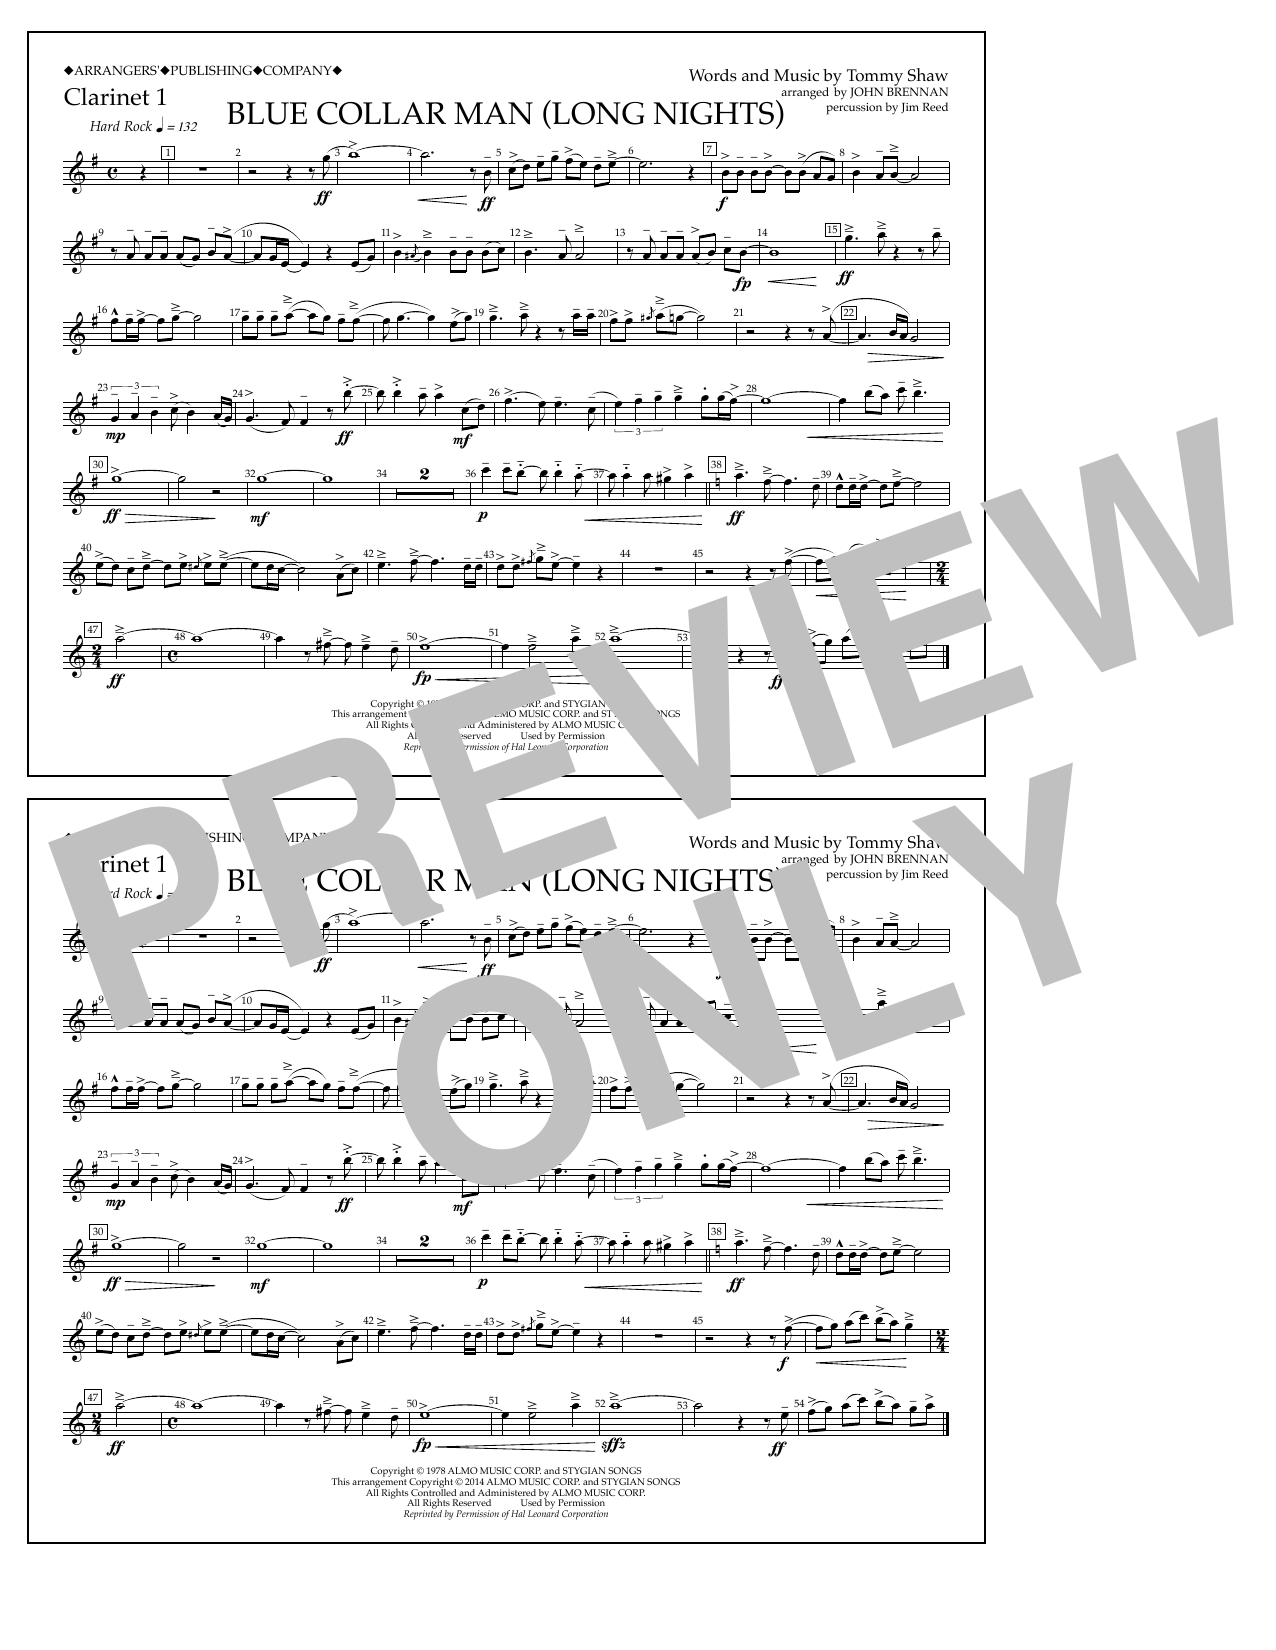 John Brennan Blue Collar Man (Long Nights) - Clarinet 1 Sheet Music Notes & Chords for Marching Band - Download or Print PDF